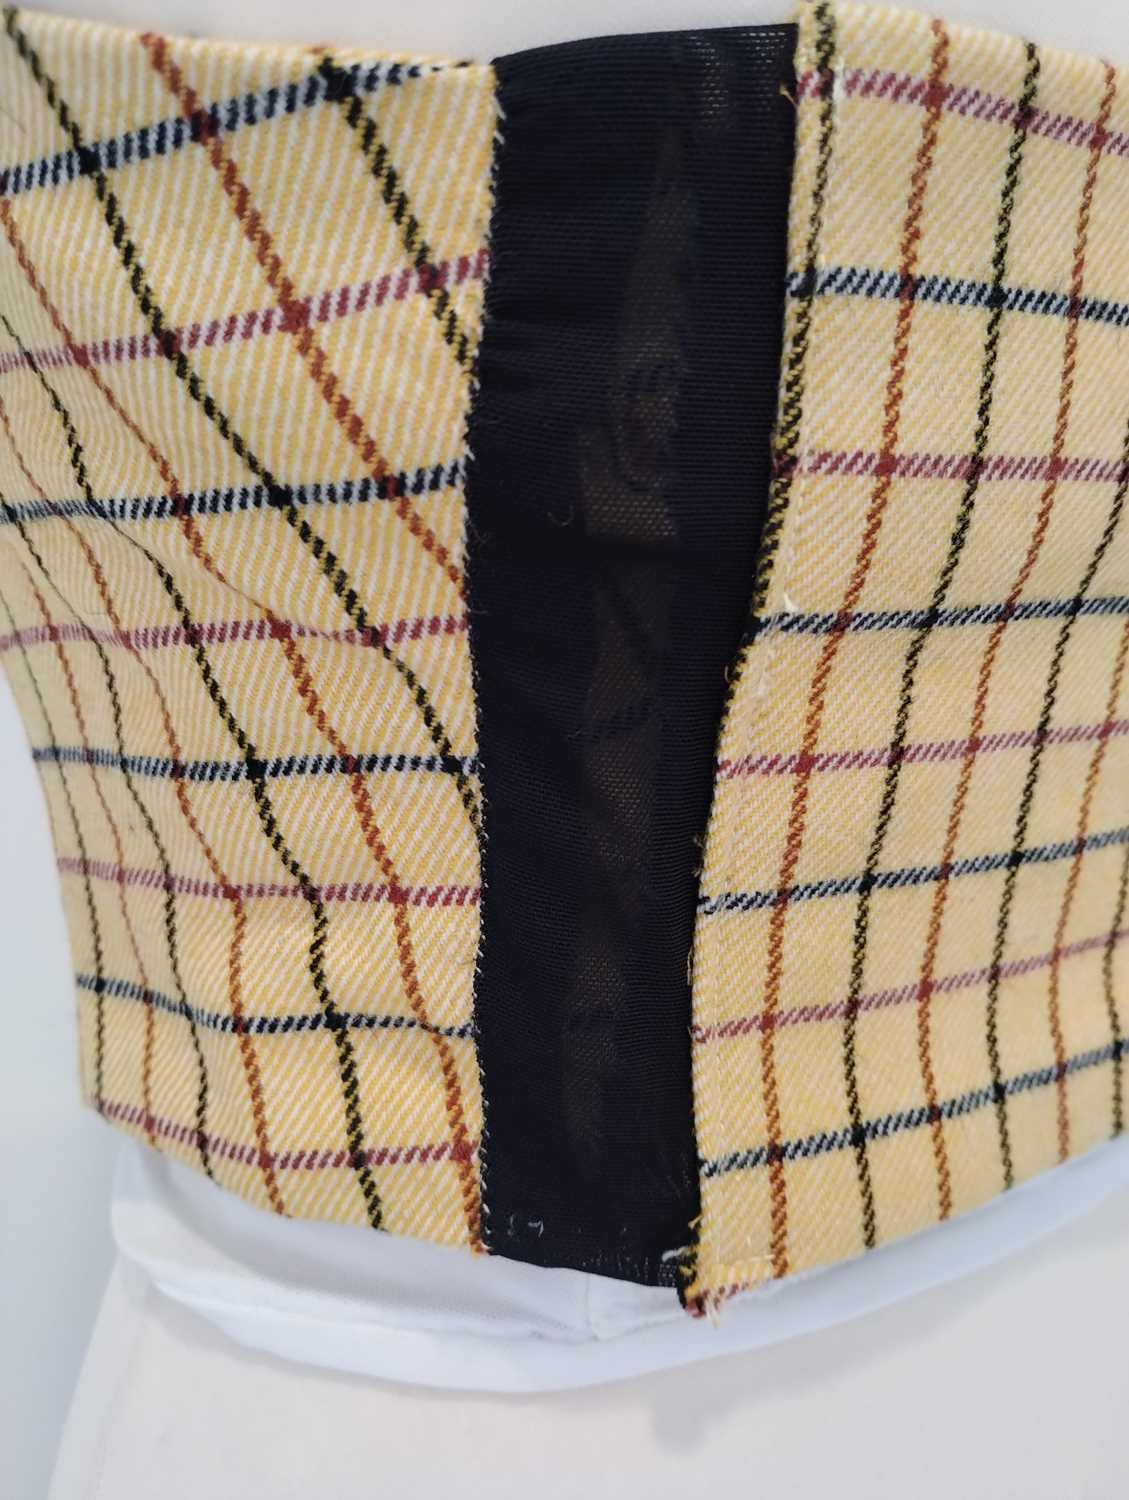 Vivienne Westwood London Harris Tweed Jacket, Vive La Cocotte Collection 1995-6, in yellow - Image 24 of 56